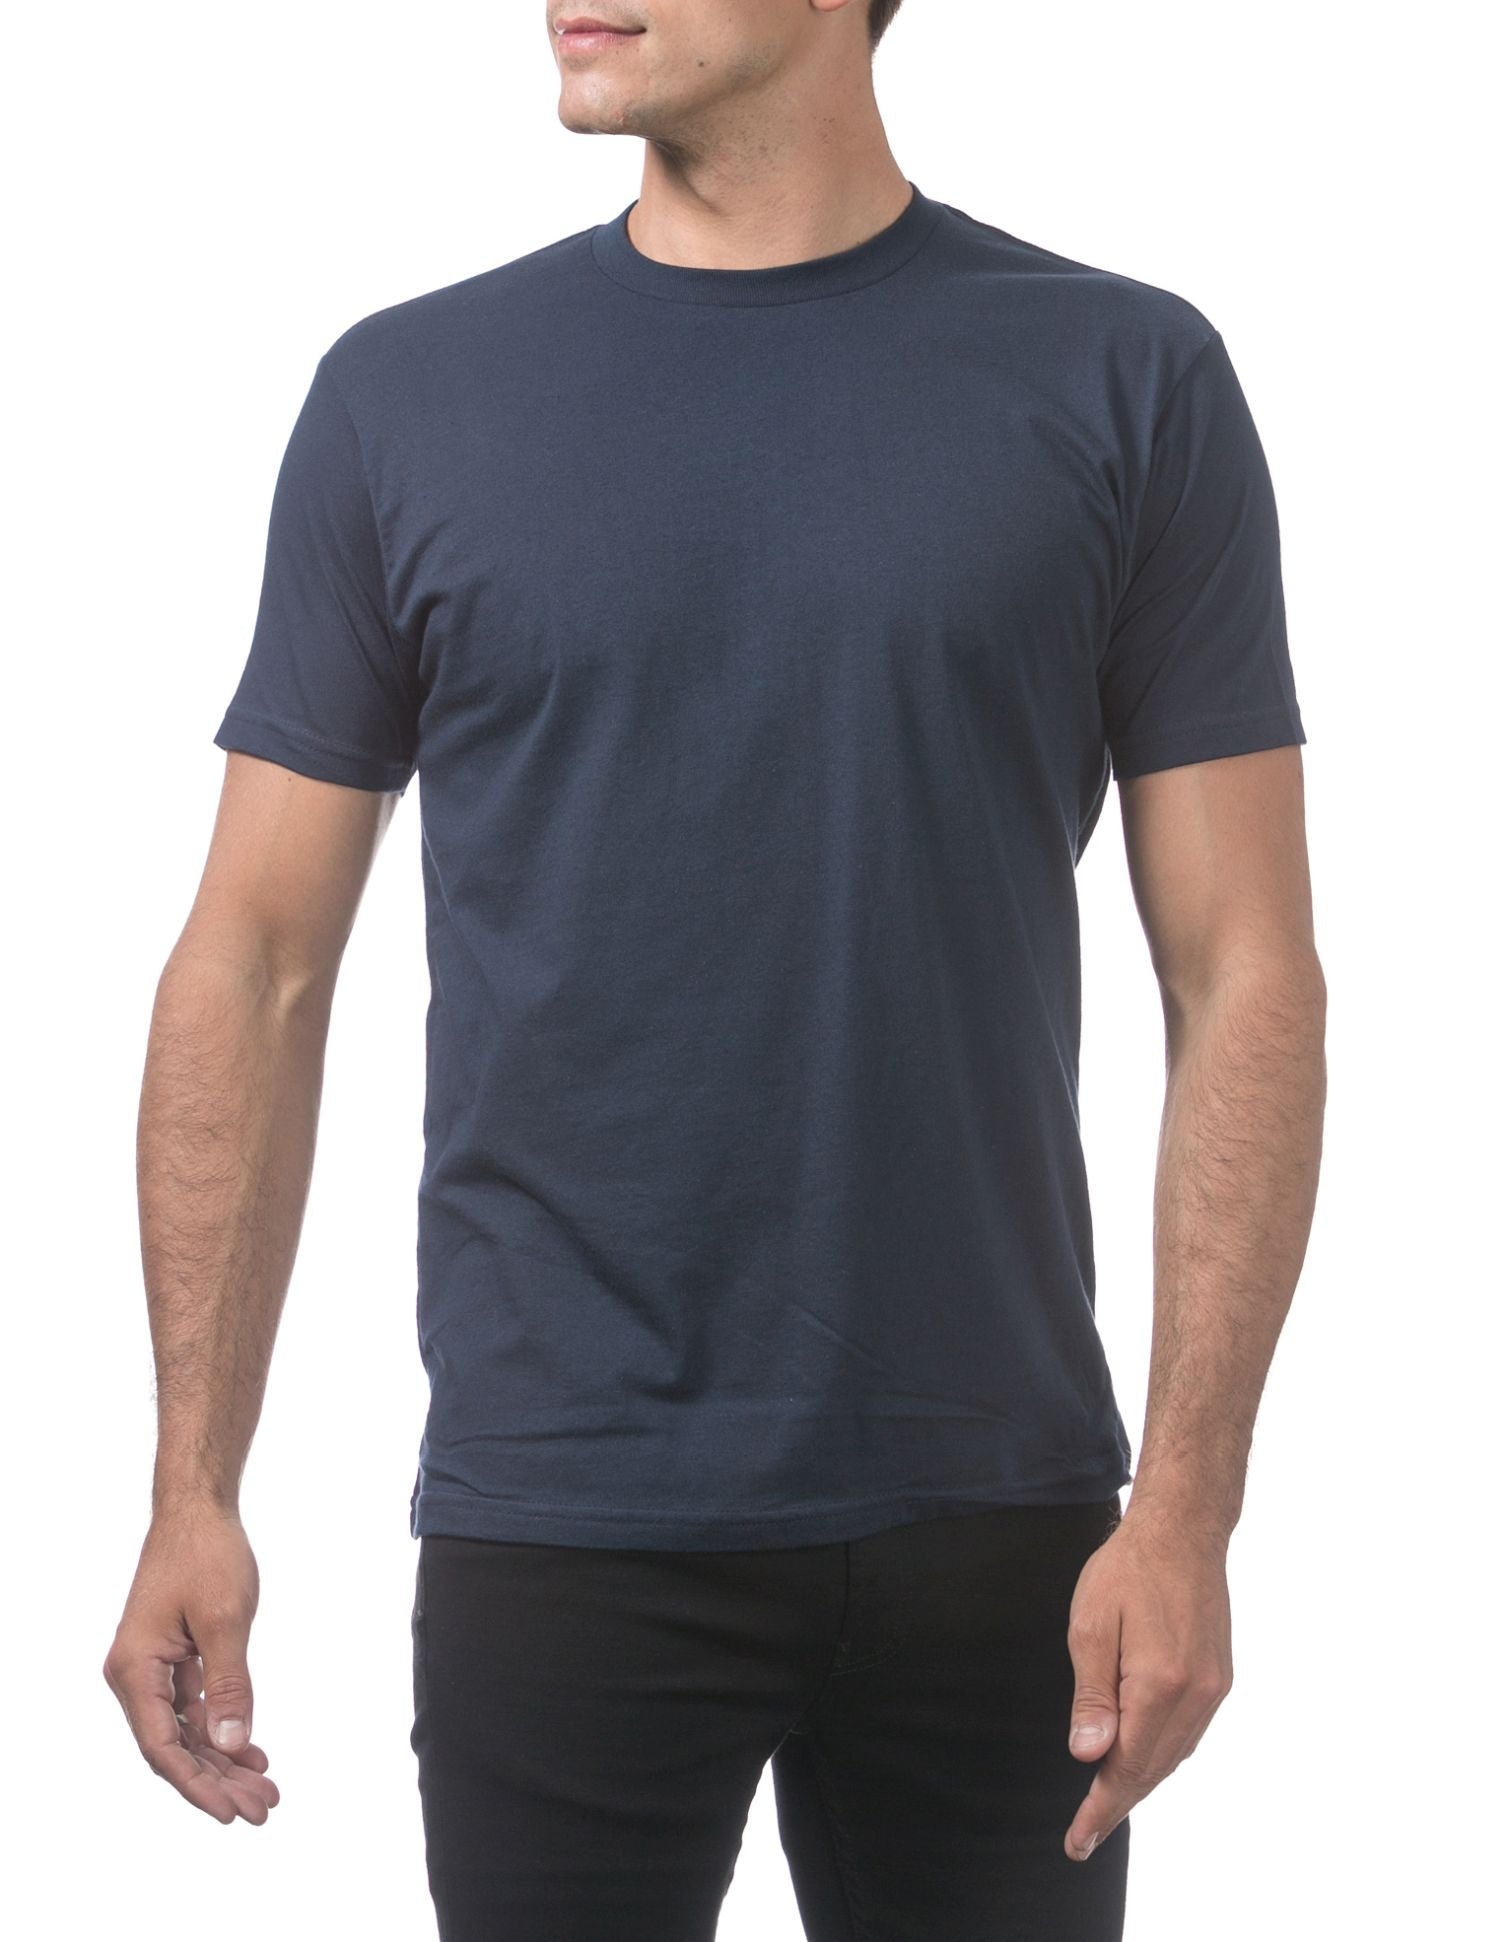 Pro Club Men's Comfort Cotton Short Sleeve T-Shirt - Navy Blue - Large - Pro-Distributing